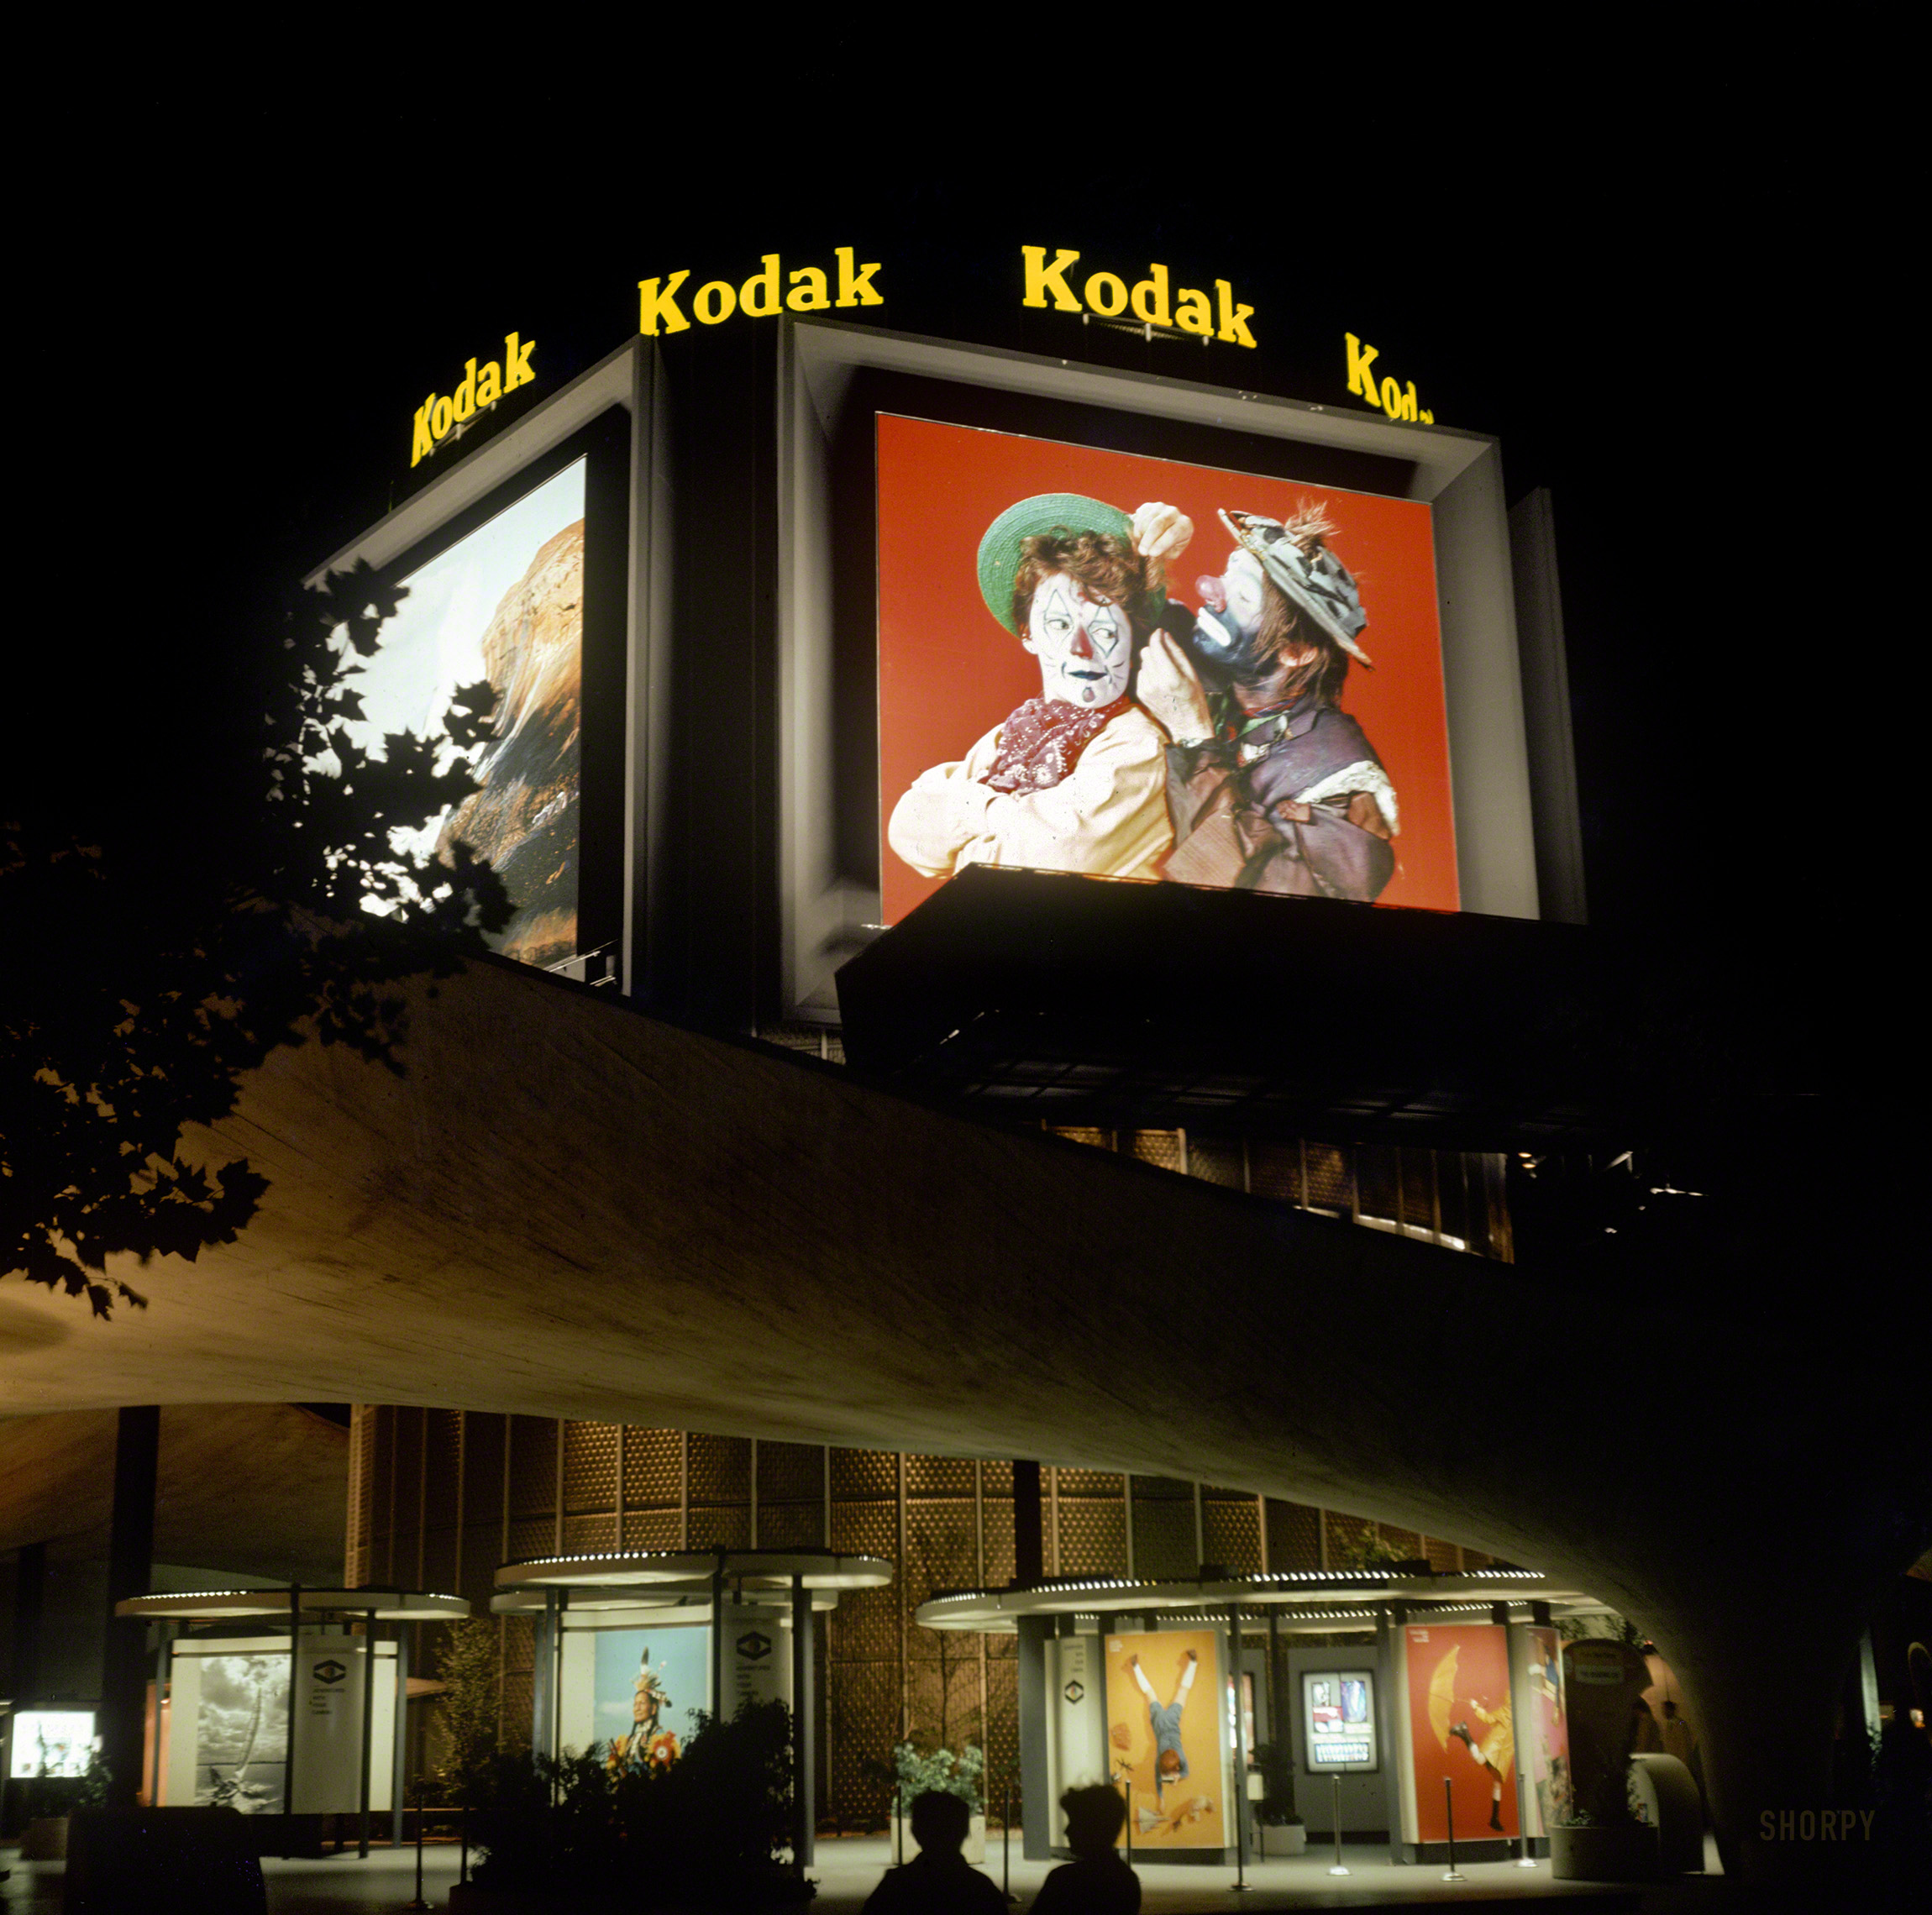 1965. "New York World's Fair -- Kodak Pavilion at night." Medium format color transparency, photographer unknown. View full size.